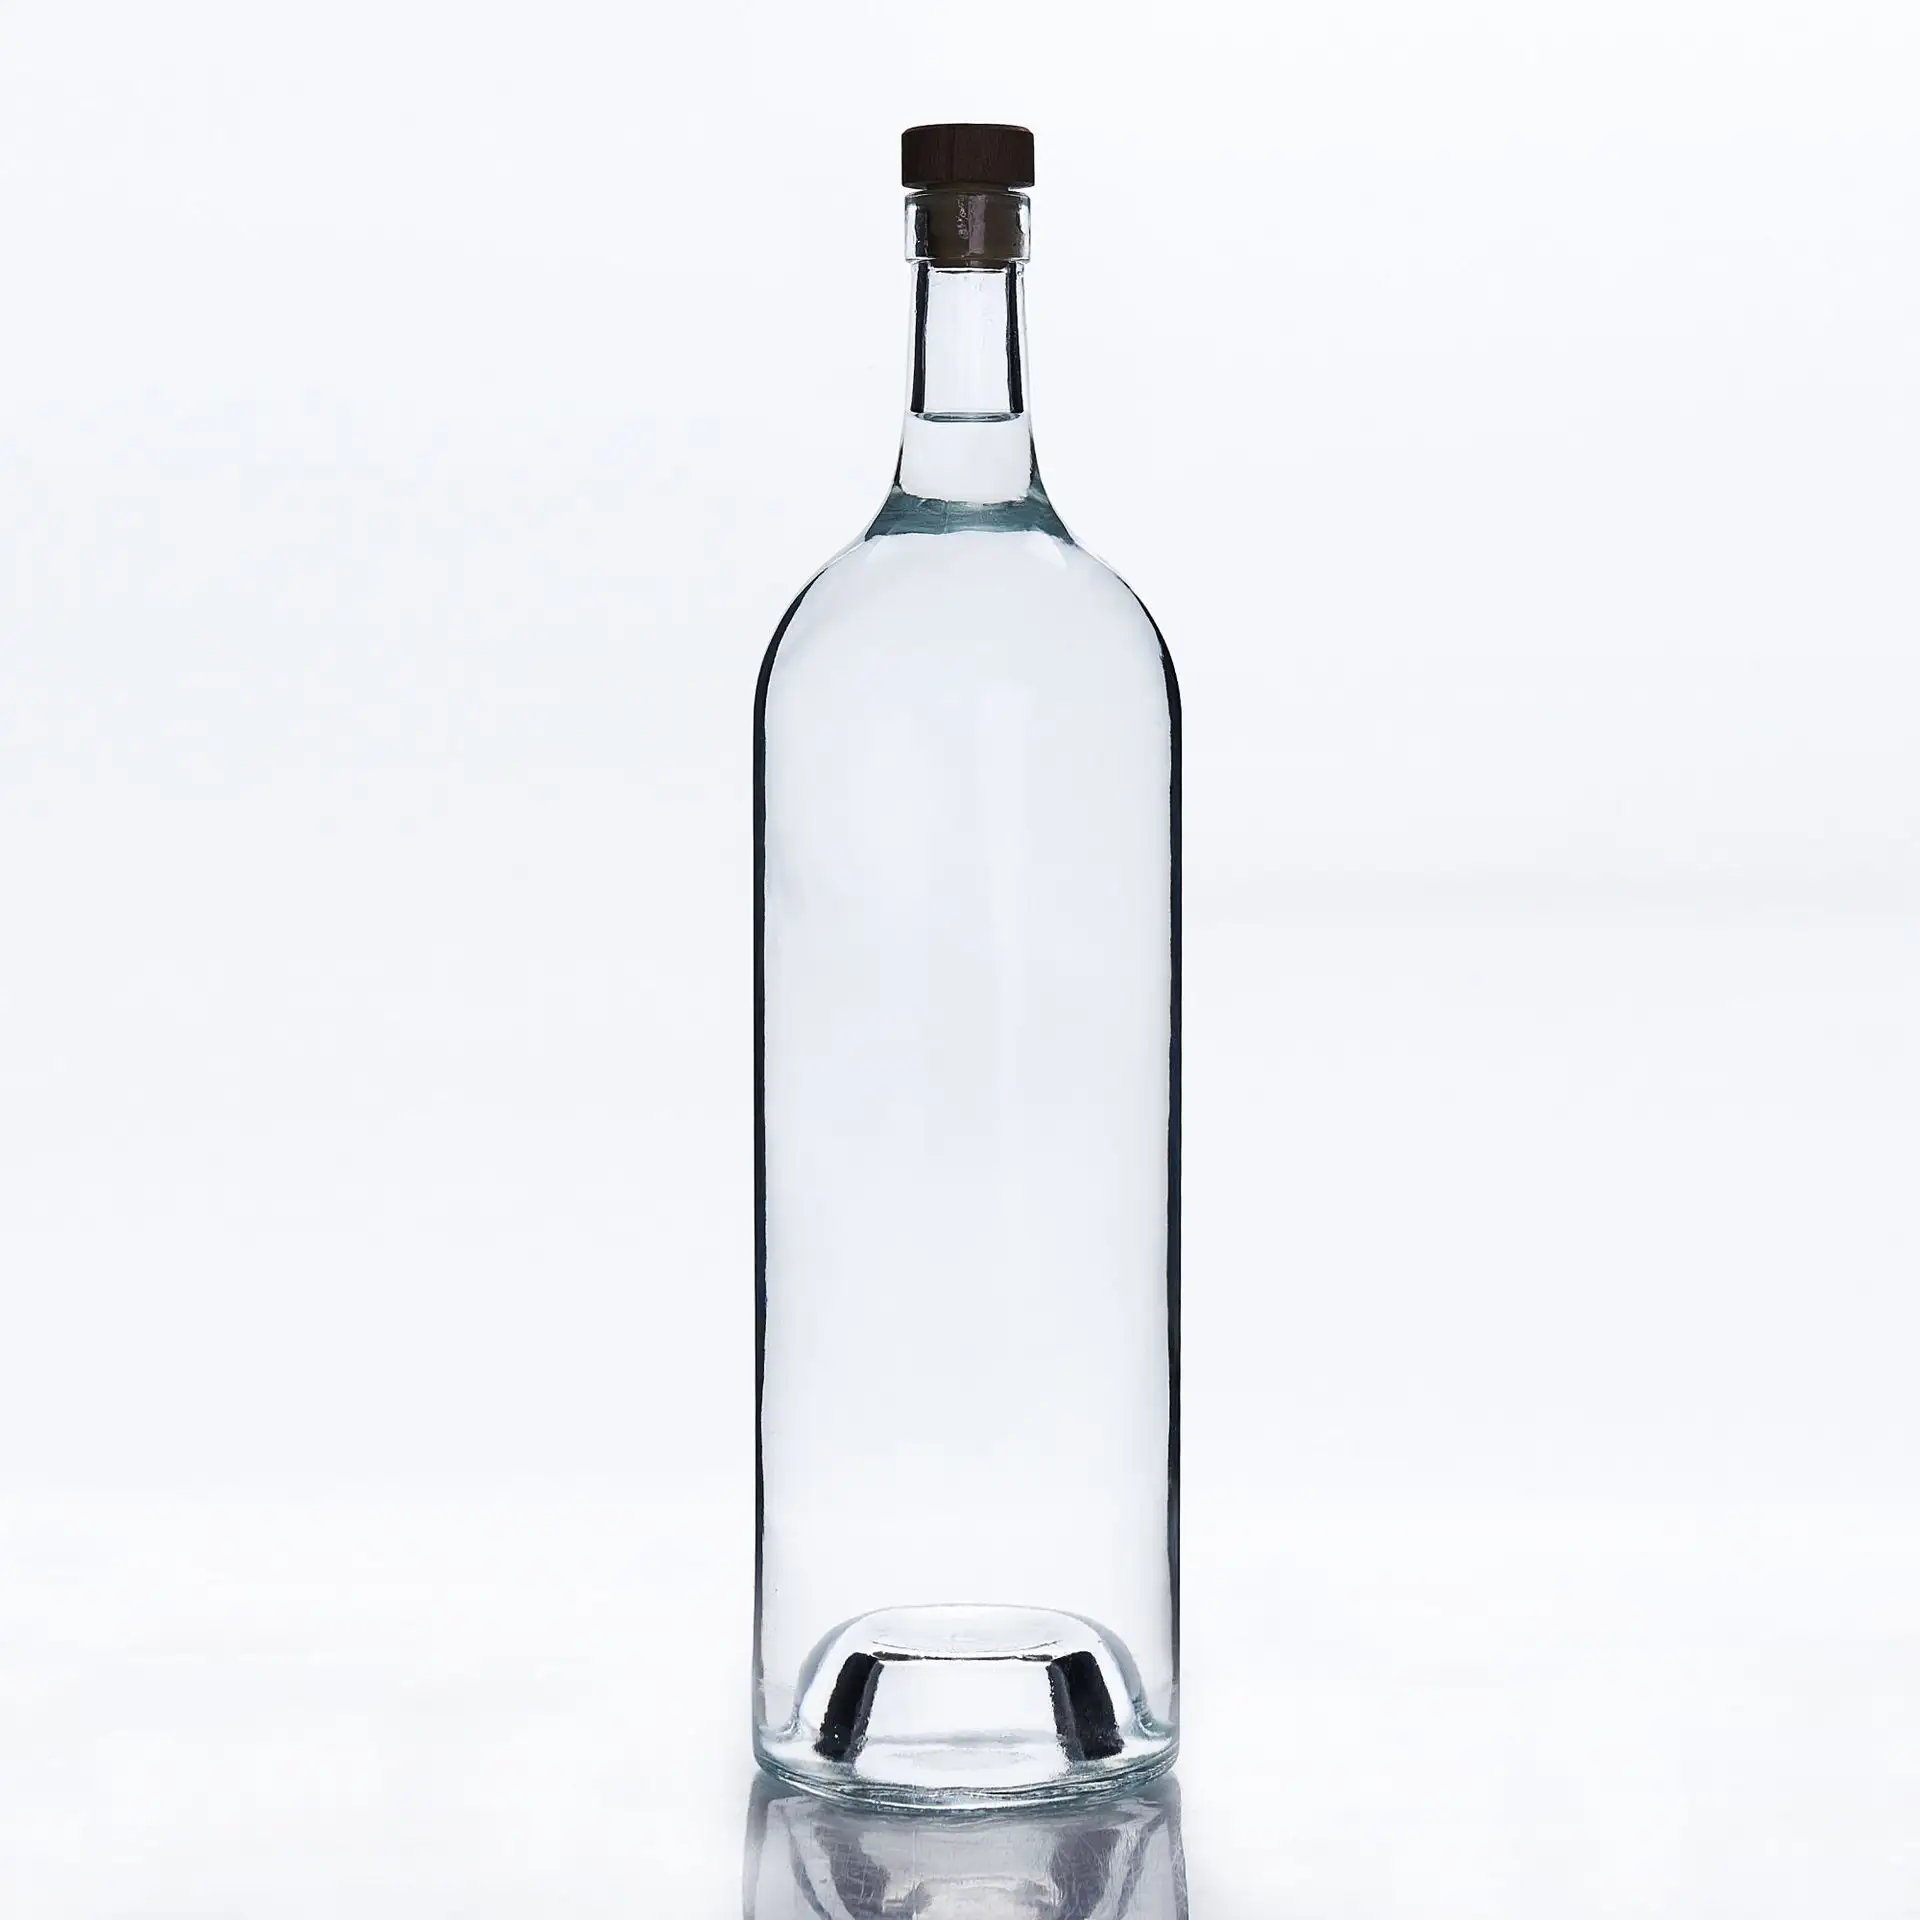 ODM/OEM lager size 1500ml 1.5L 150cl clear glass beverage liquor spirit vodka bottle with cork stopper